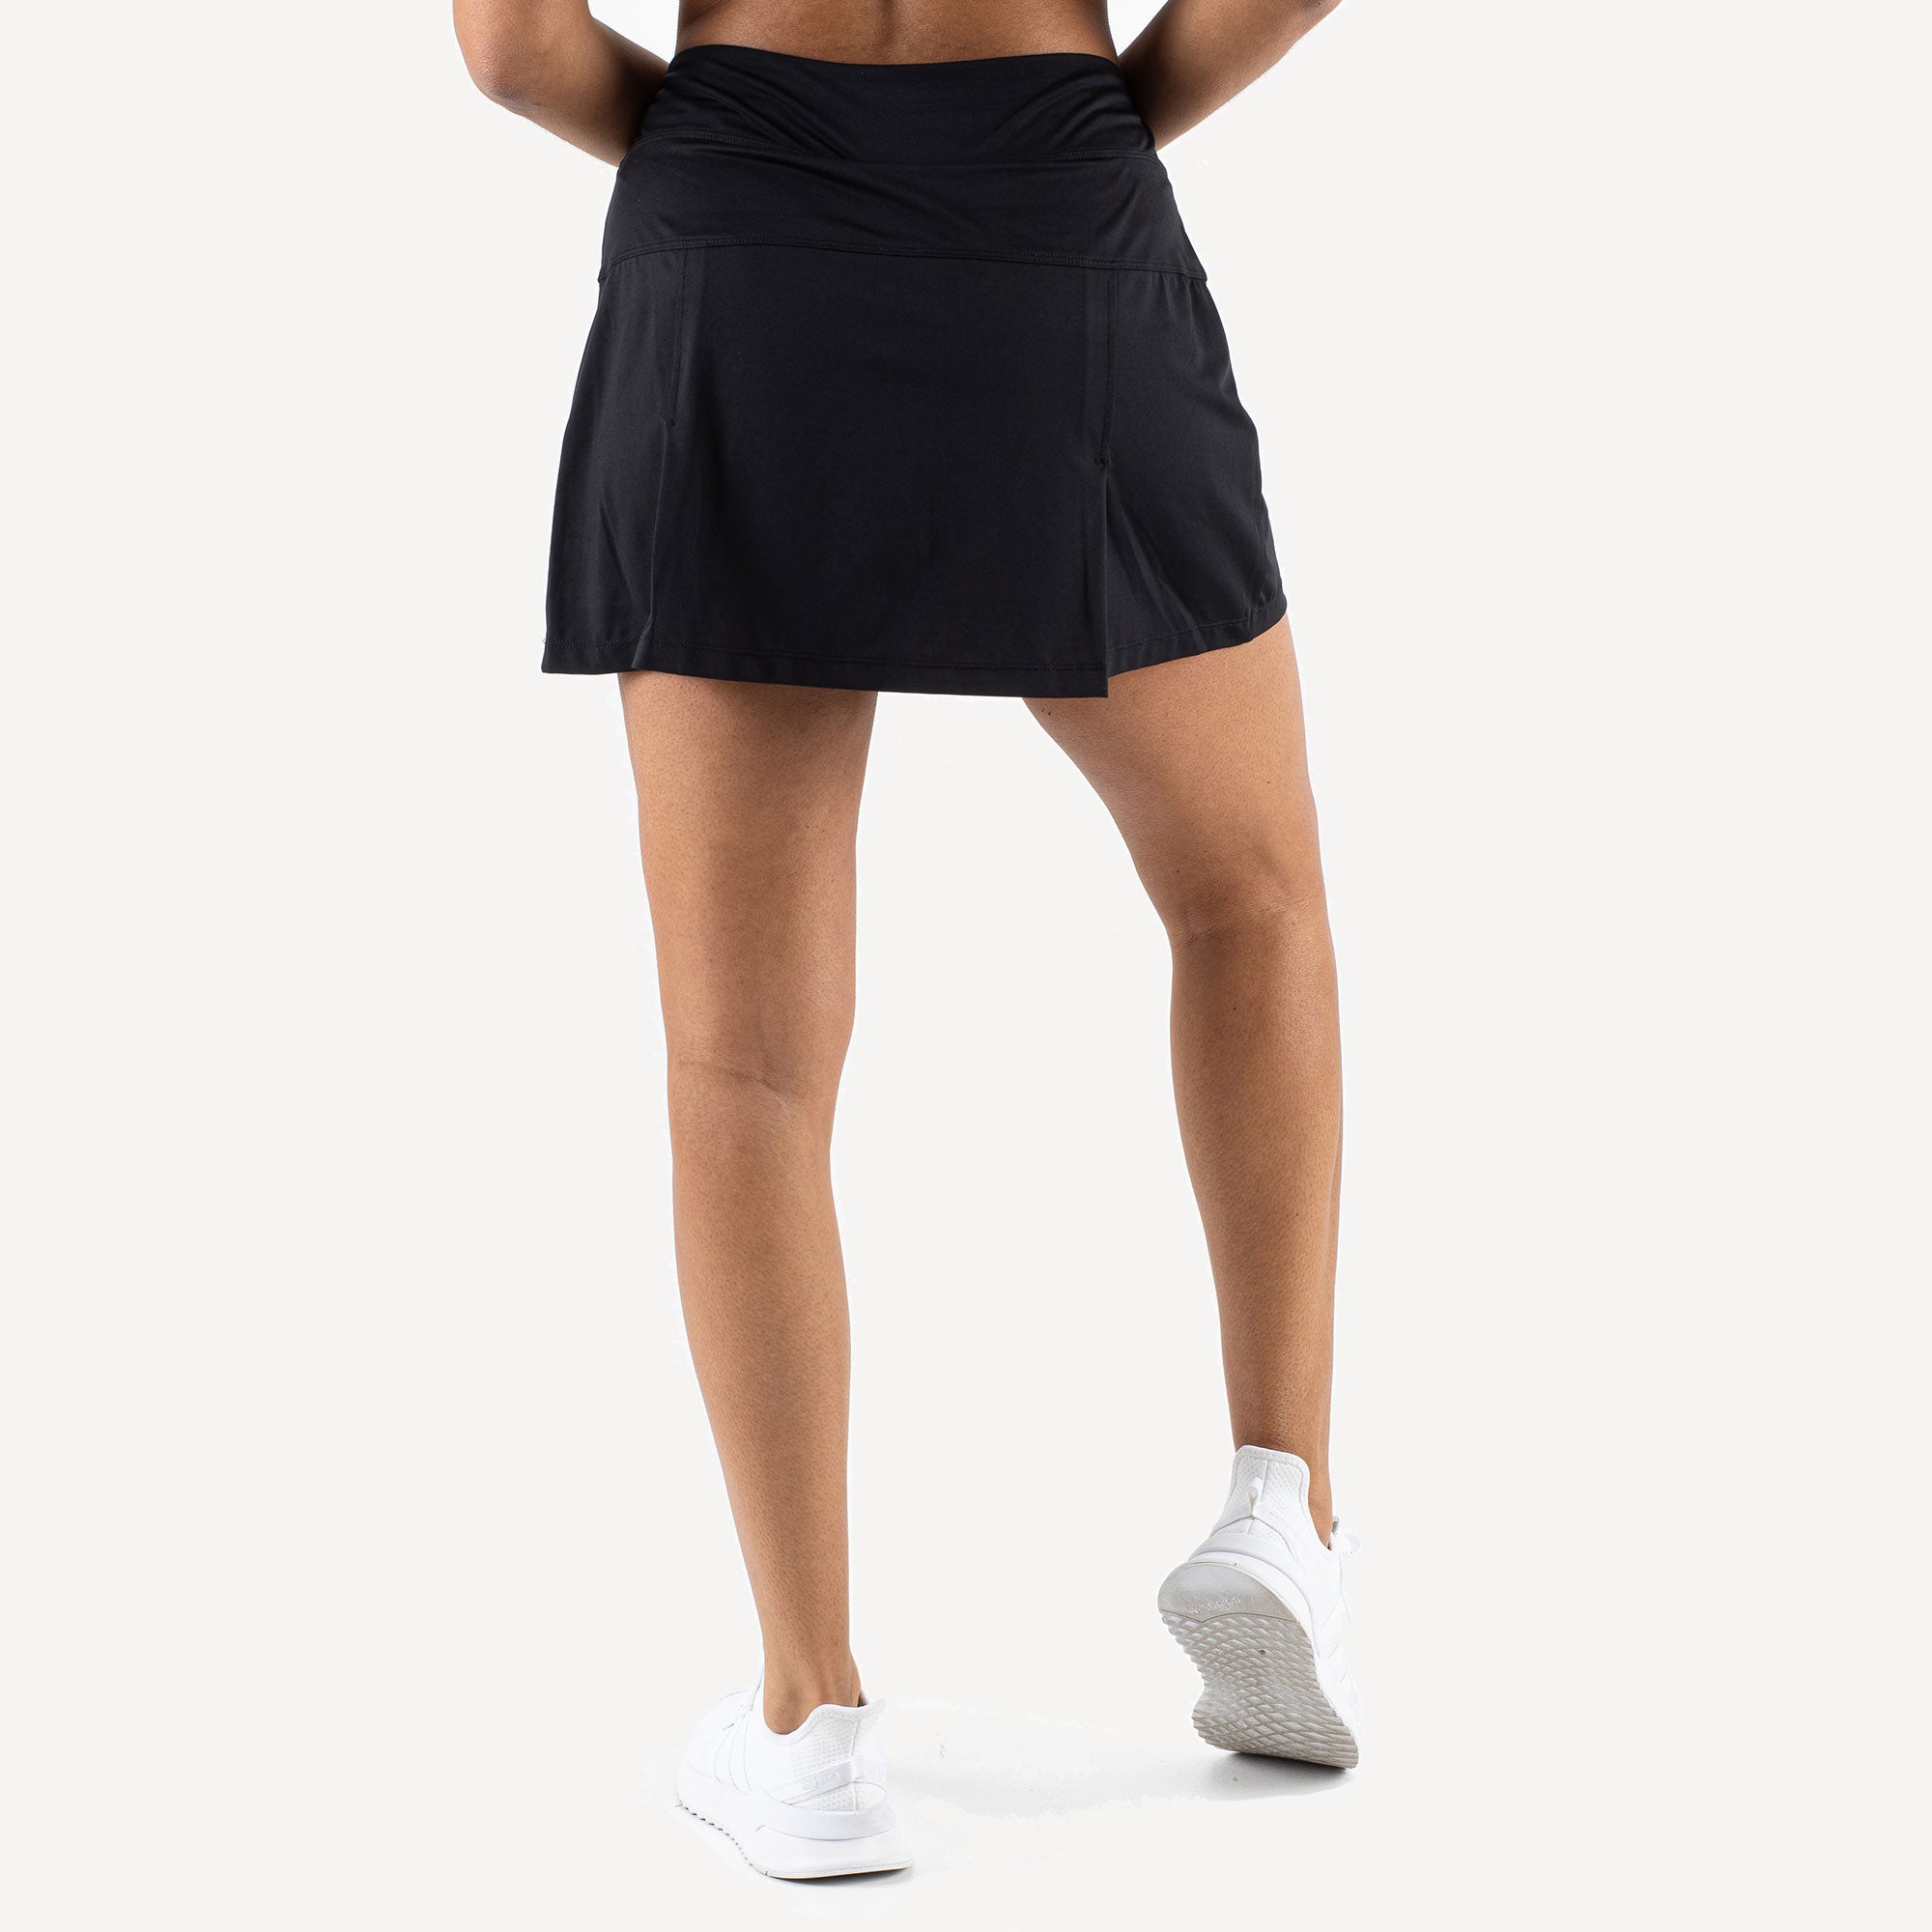 Sjeng Sports Sharona Women's Tennis Skirt Black (2)